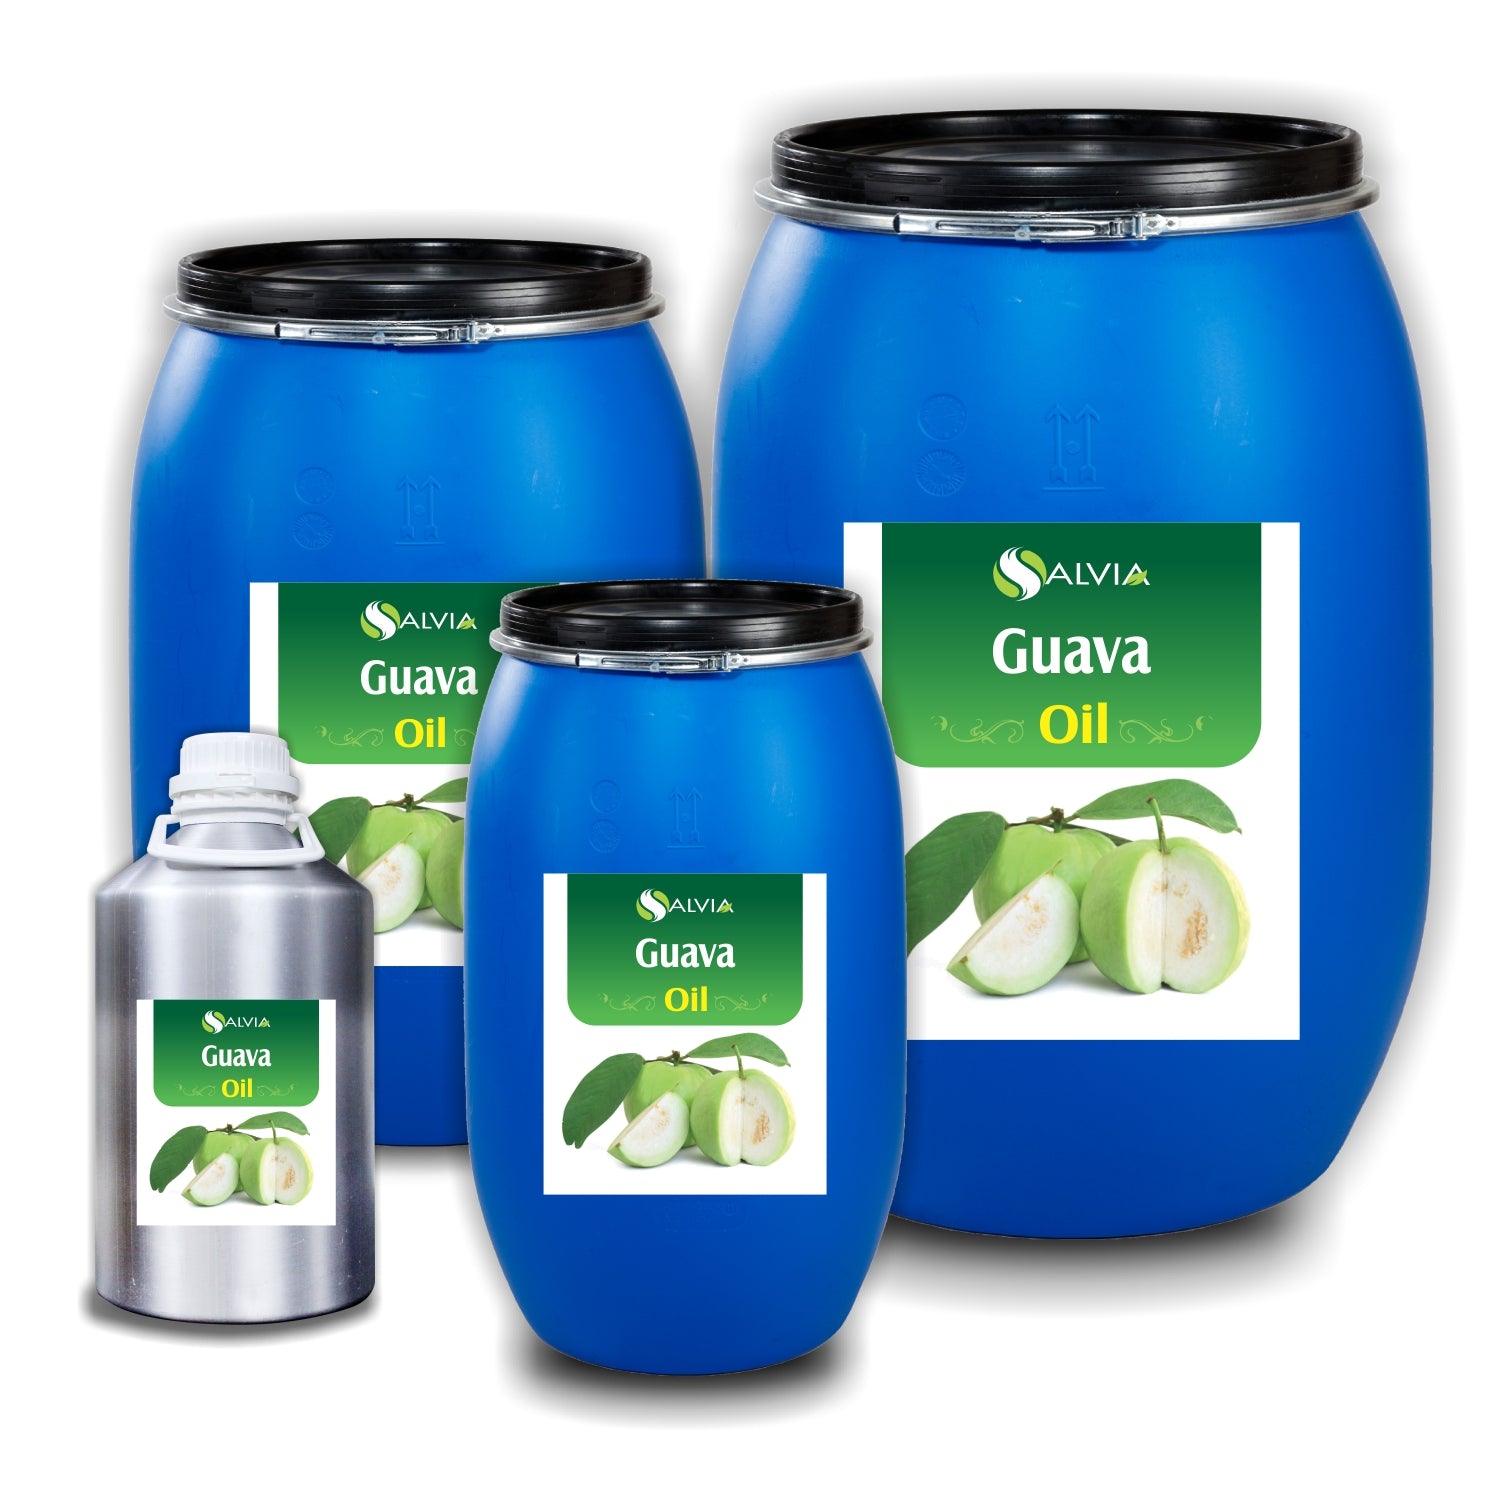 Salvia Natural Carrier Oils 10kg Guava Oil100% Natural Pure Carrier Oil